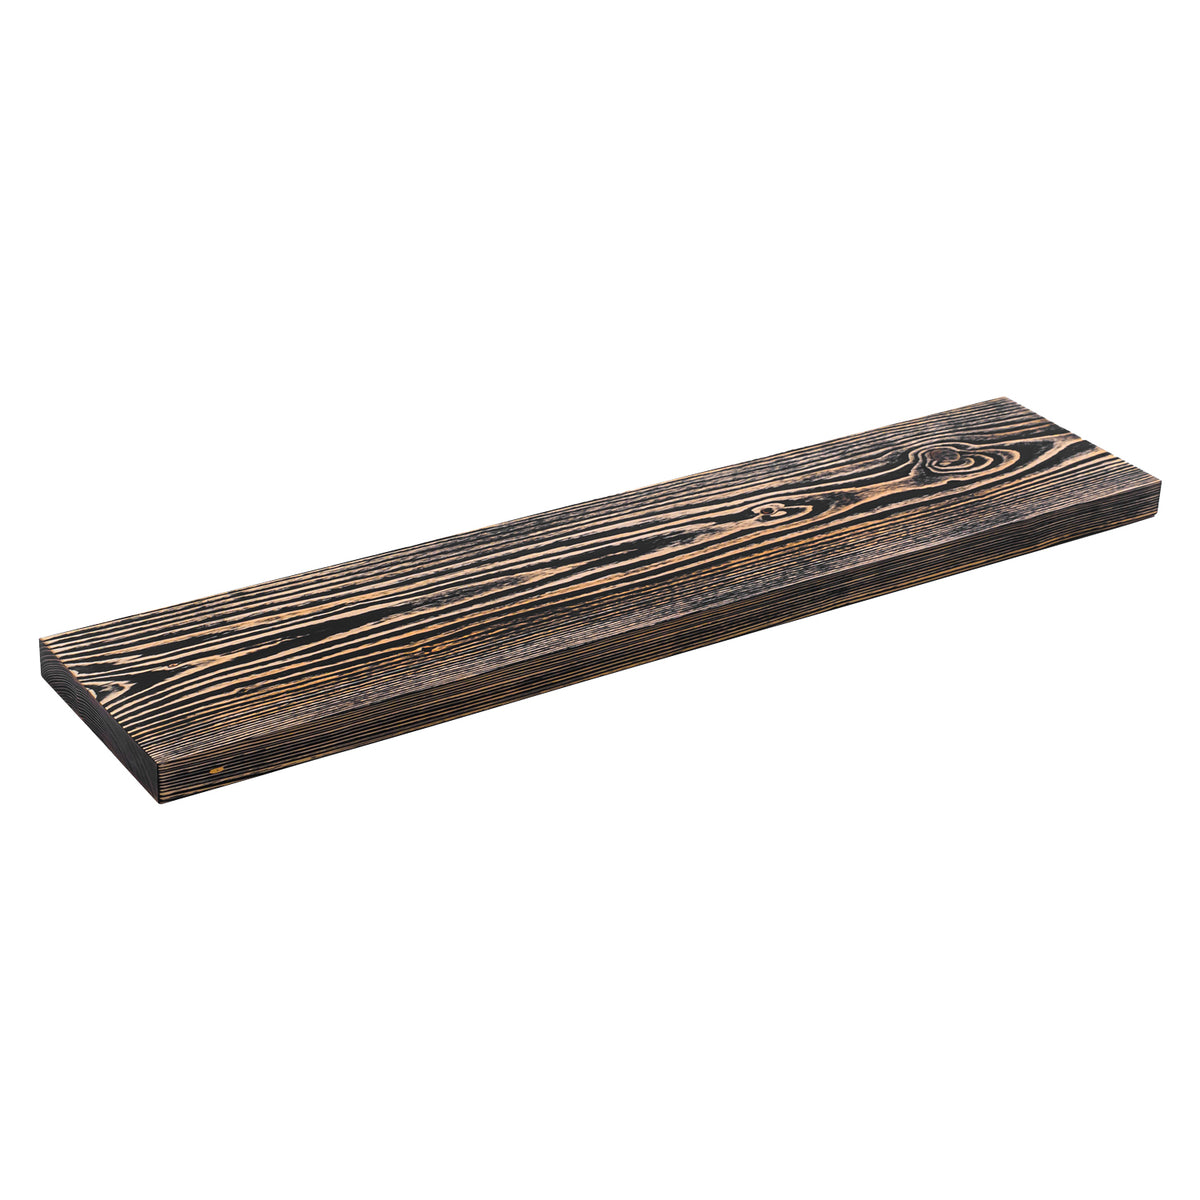 Dark Wood Floating Shelf - Solid Wood - 32mm thick